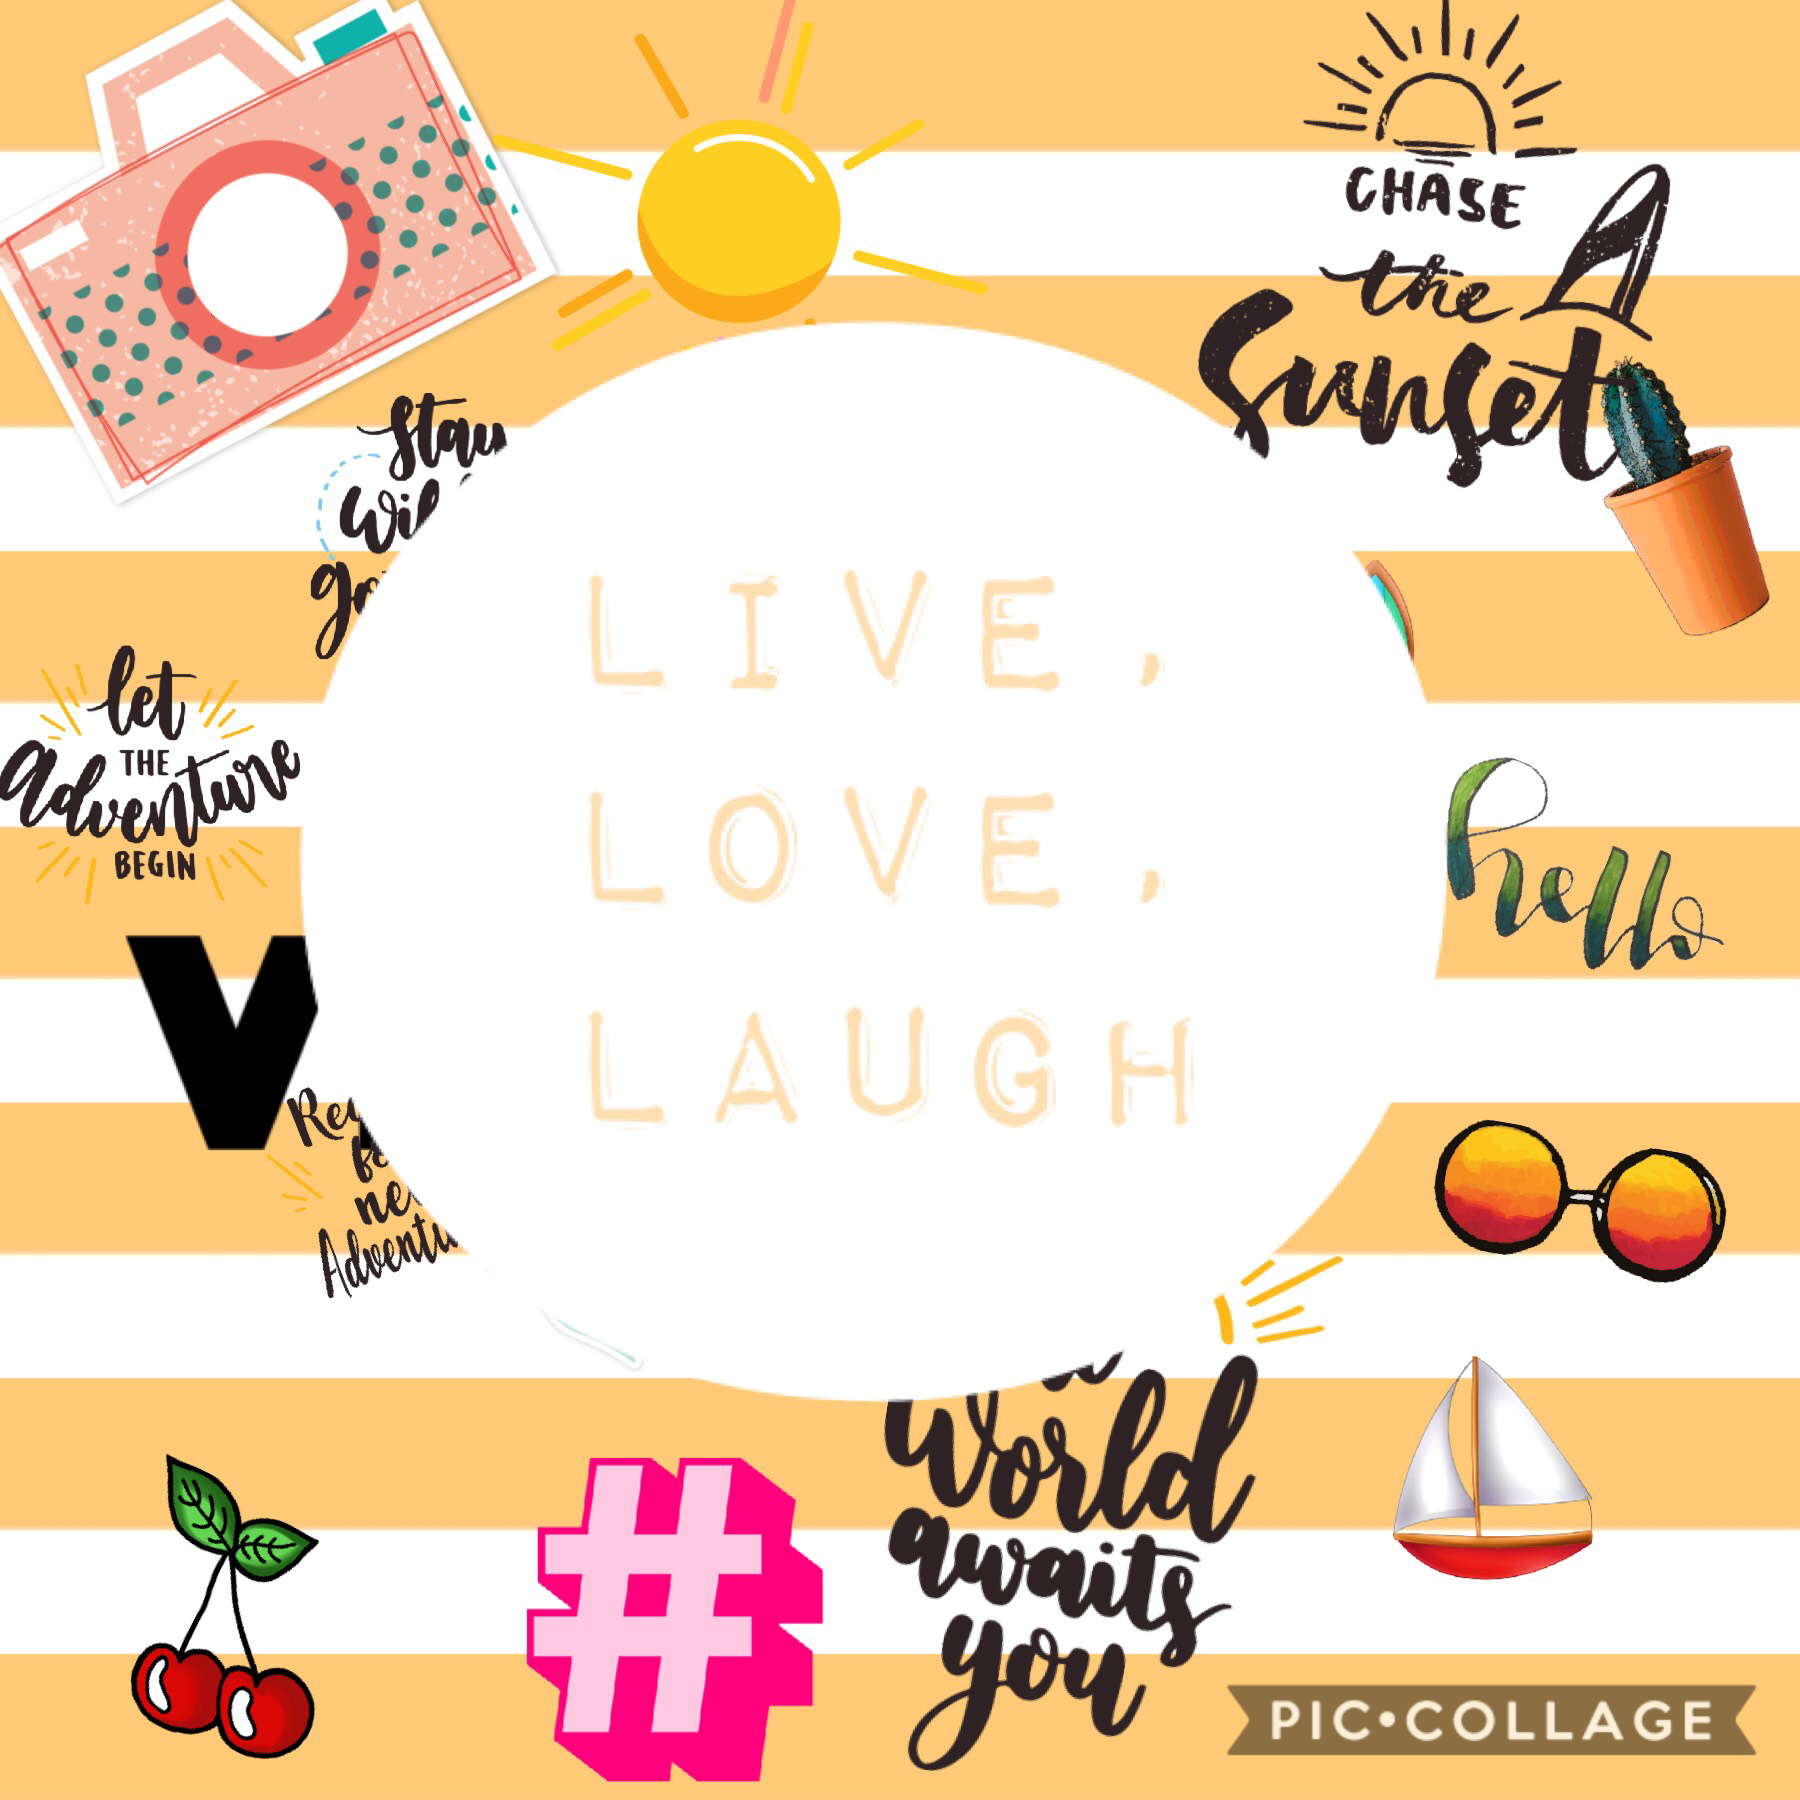 Live, love, laugh!!!